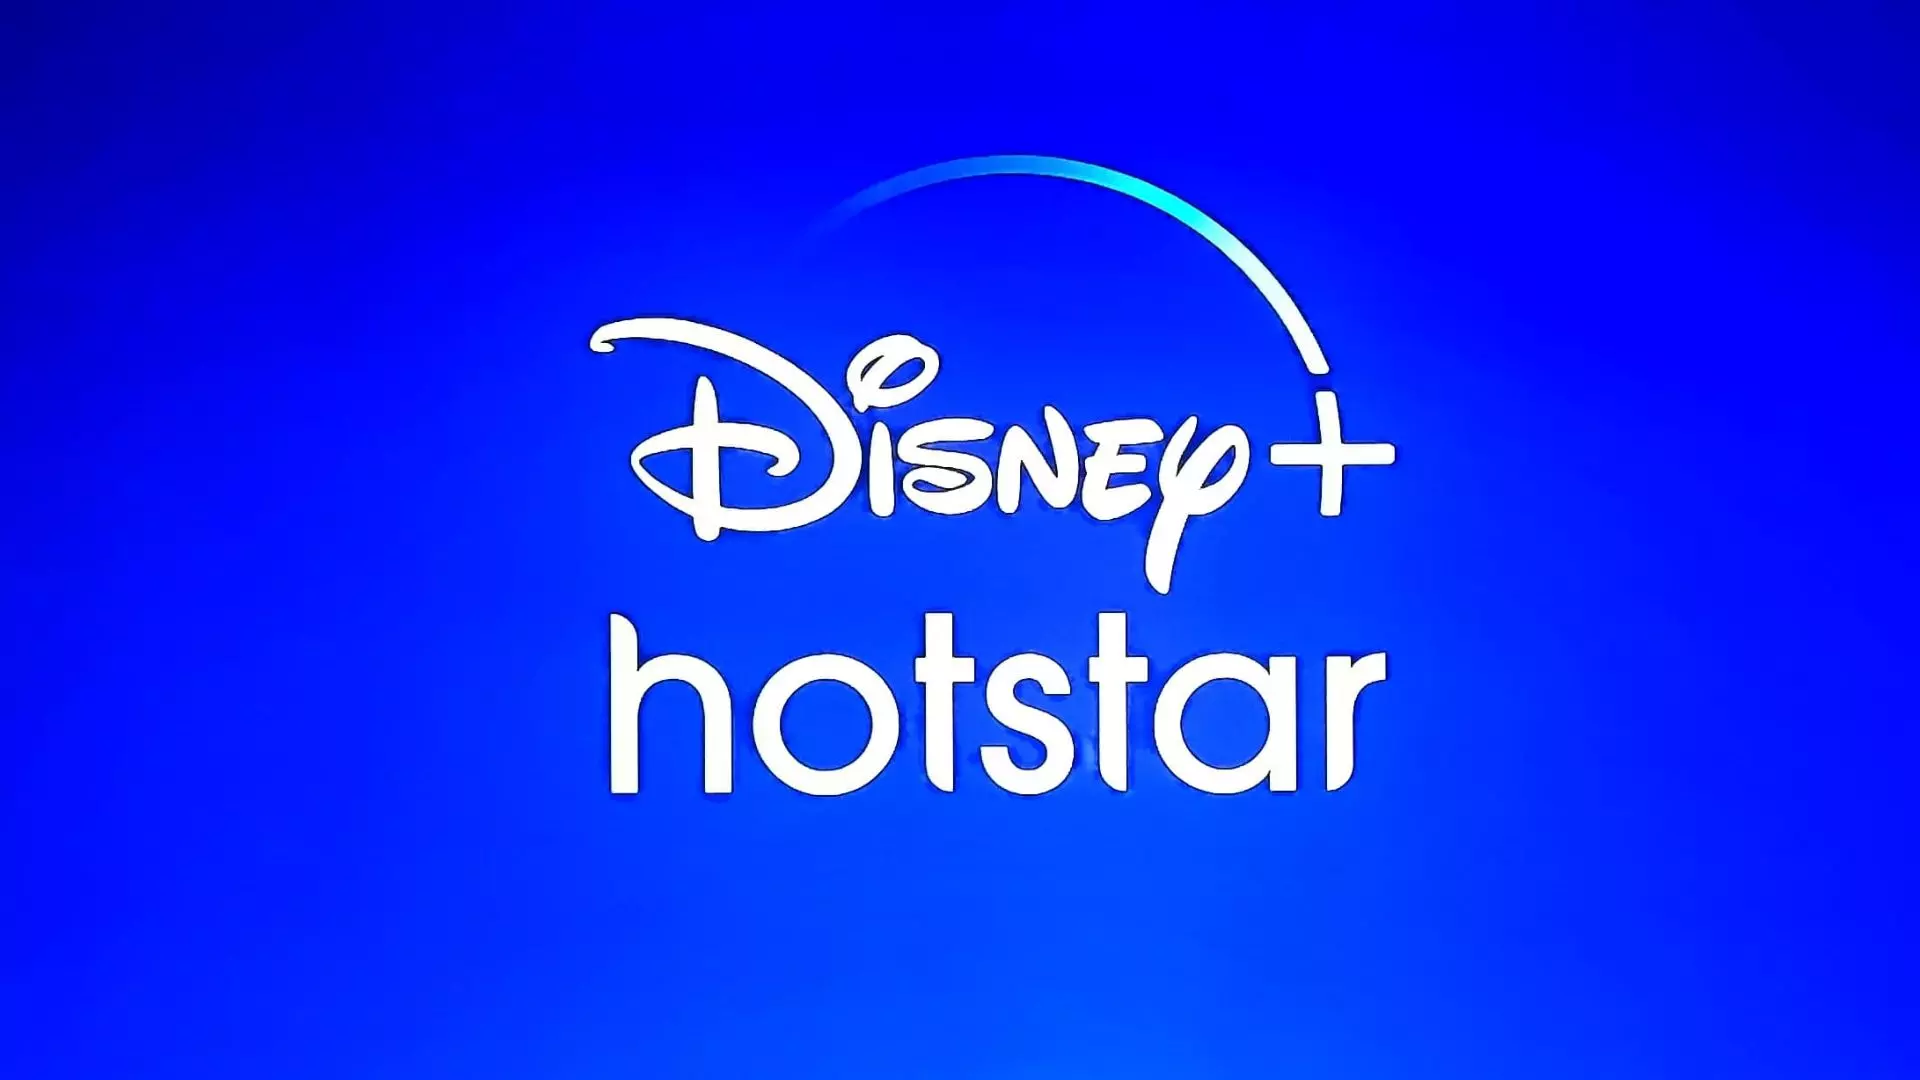 Disney+ Hotstar rolls out enhanced self-serve platform